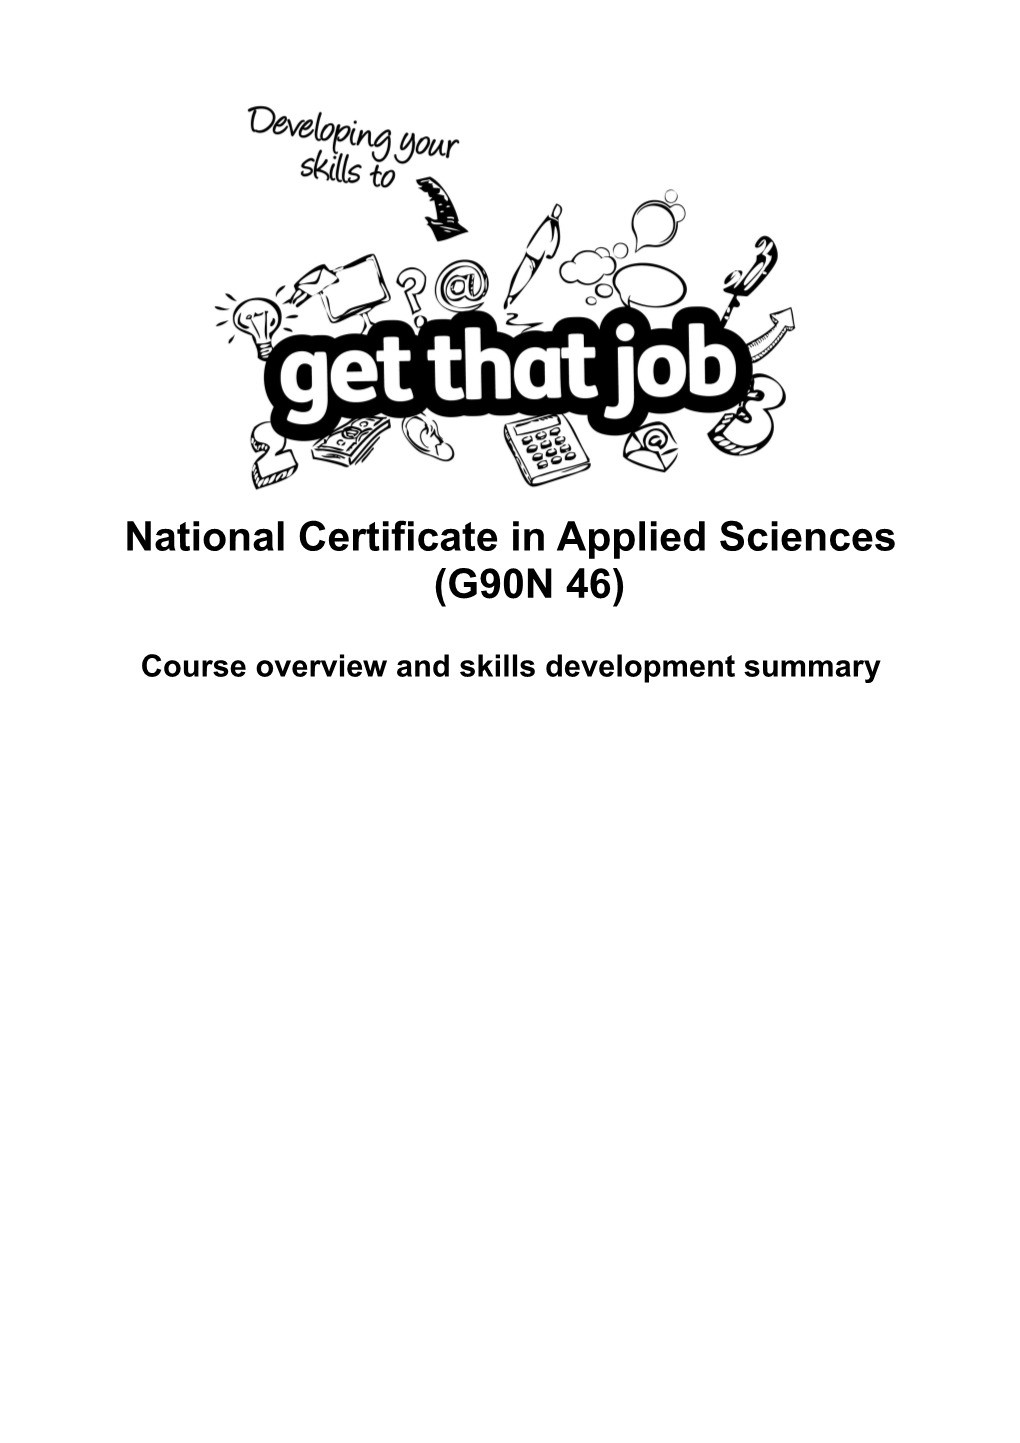 National Certificate in Applied Sciences(G90N 46)